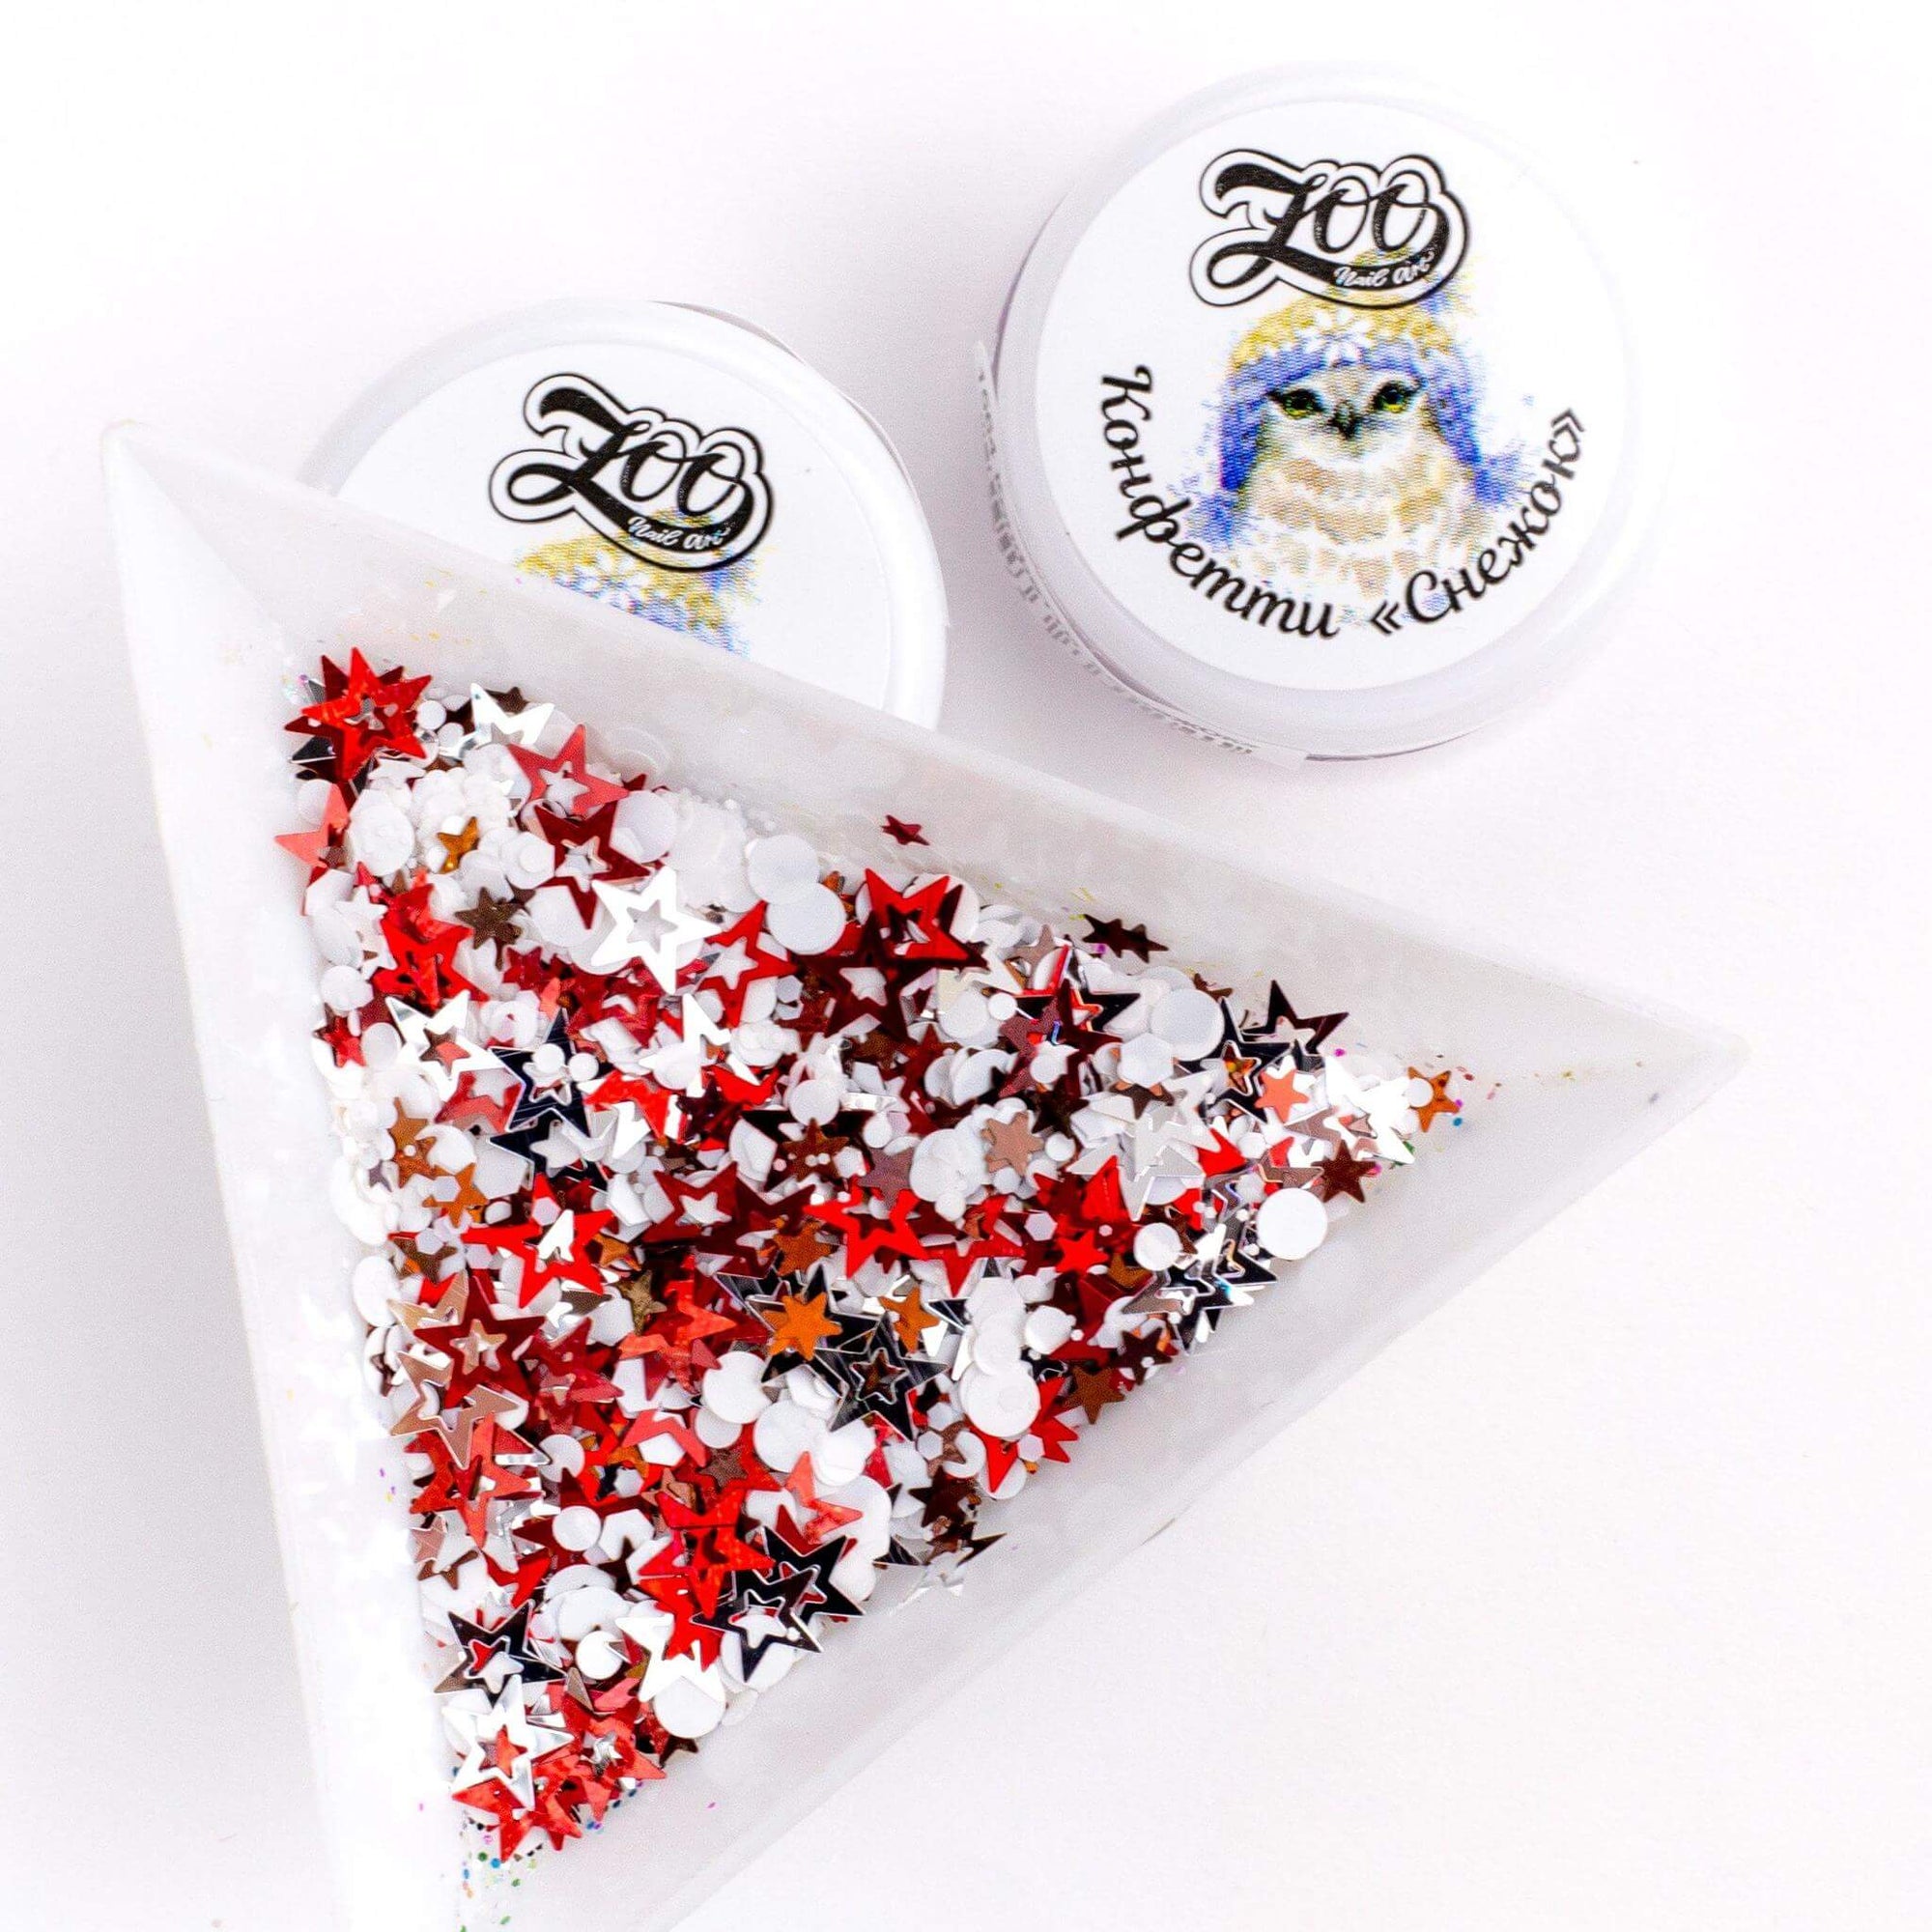 Zoo Nail Art Snowball Confetti - Red/White